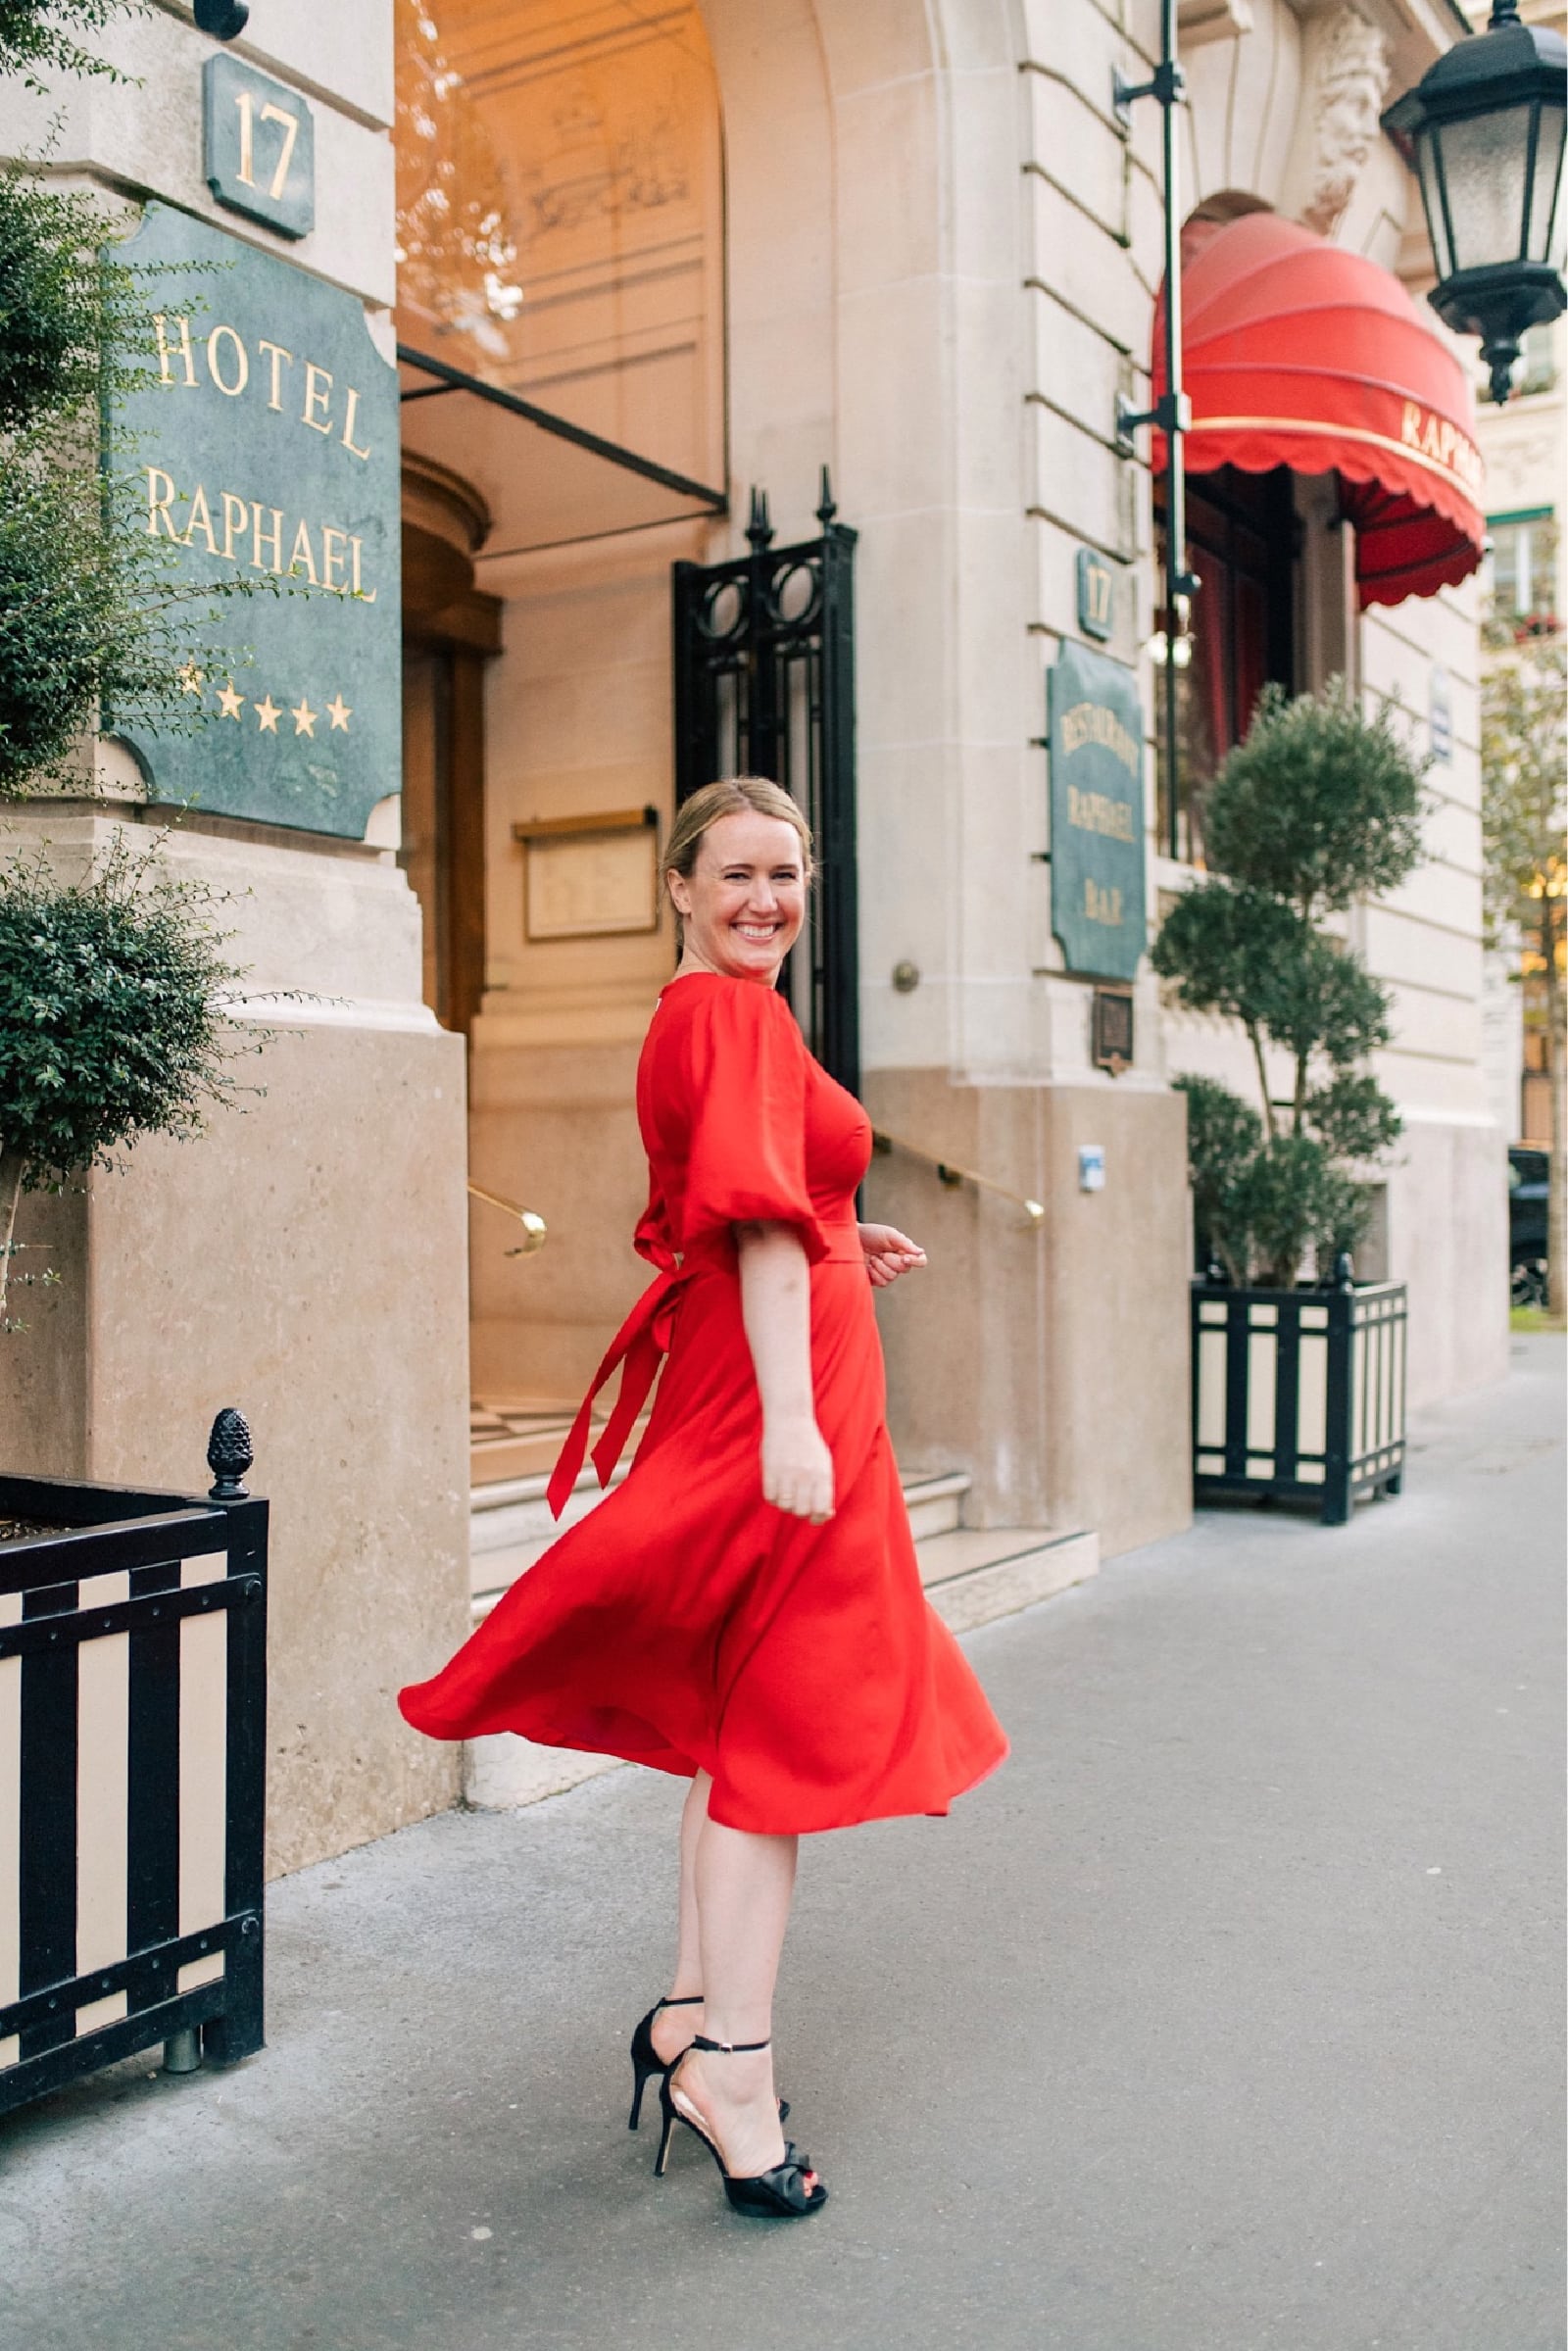 Kate Spade Dress in Paris